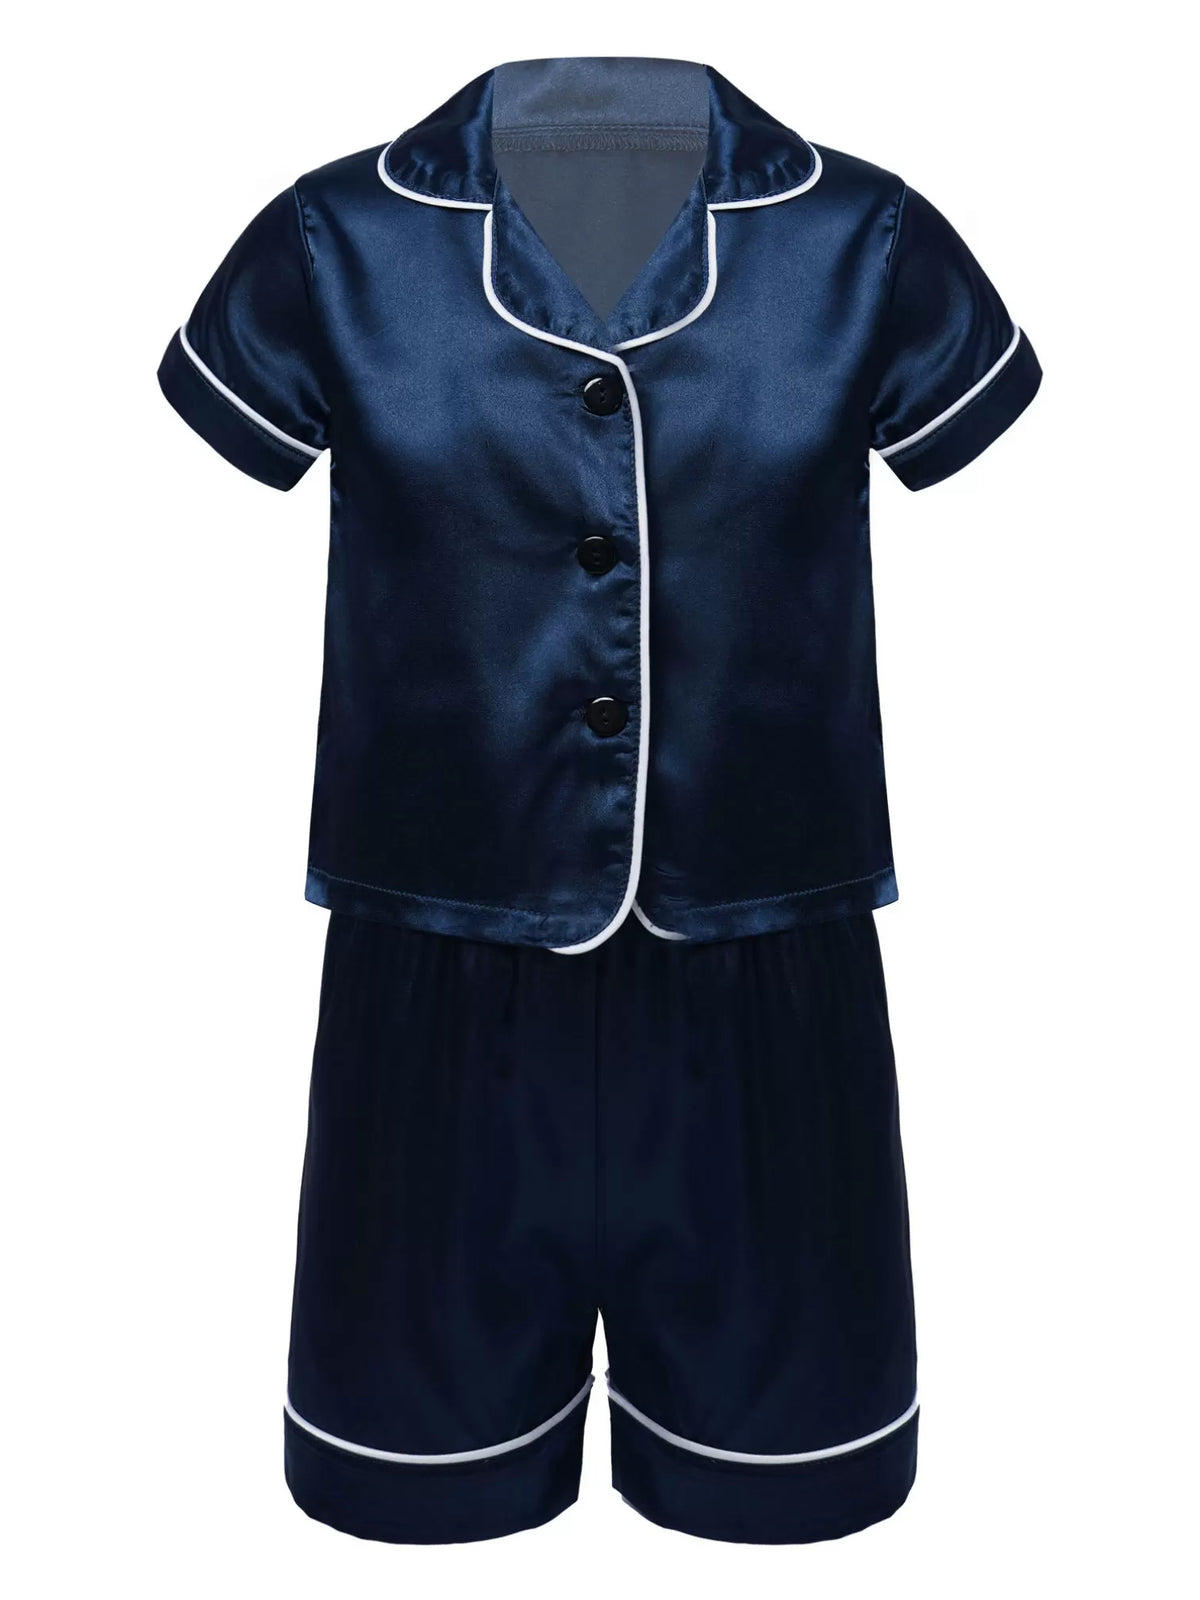 Toddler Boys Silk Pajama Sleepwear Nightwear Loungewear Clothes Set